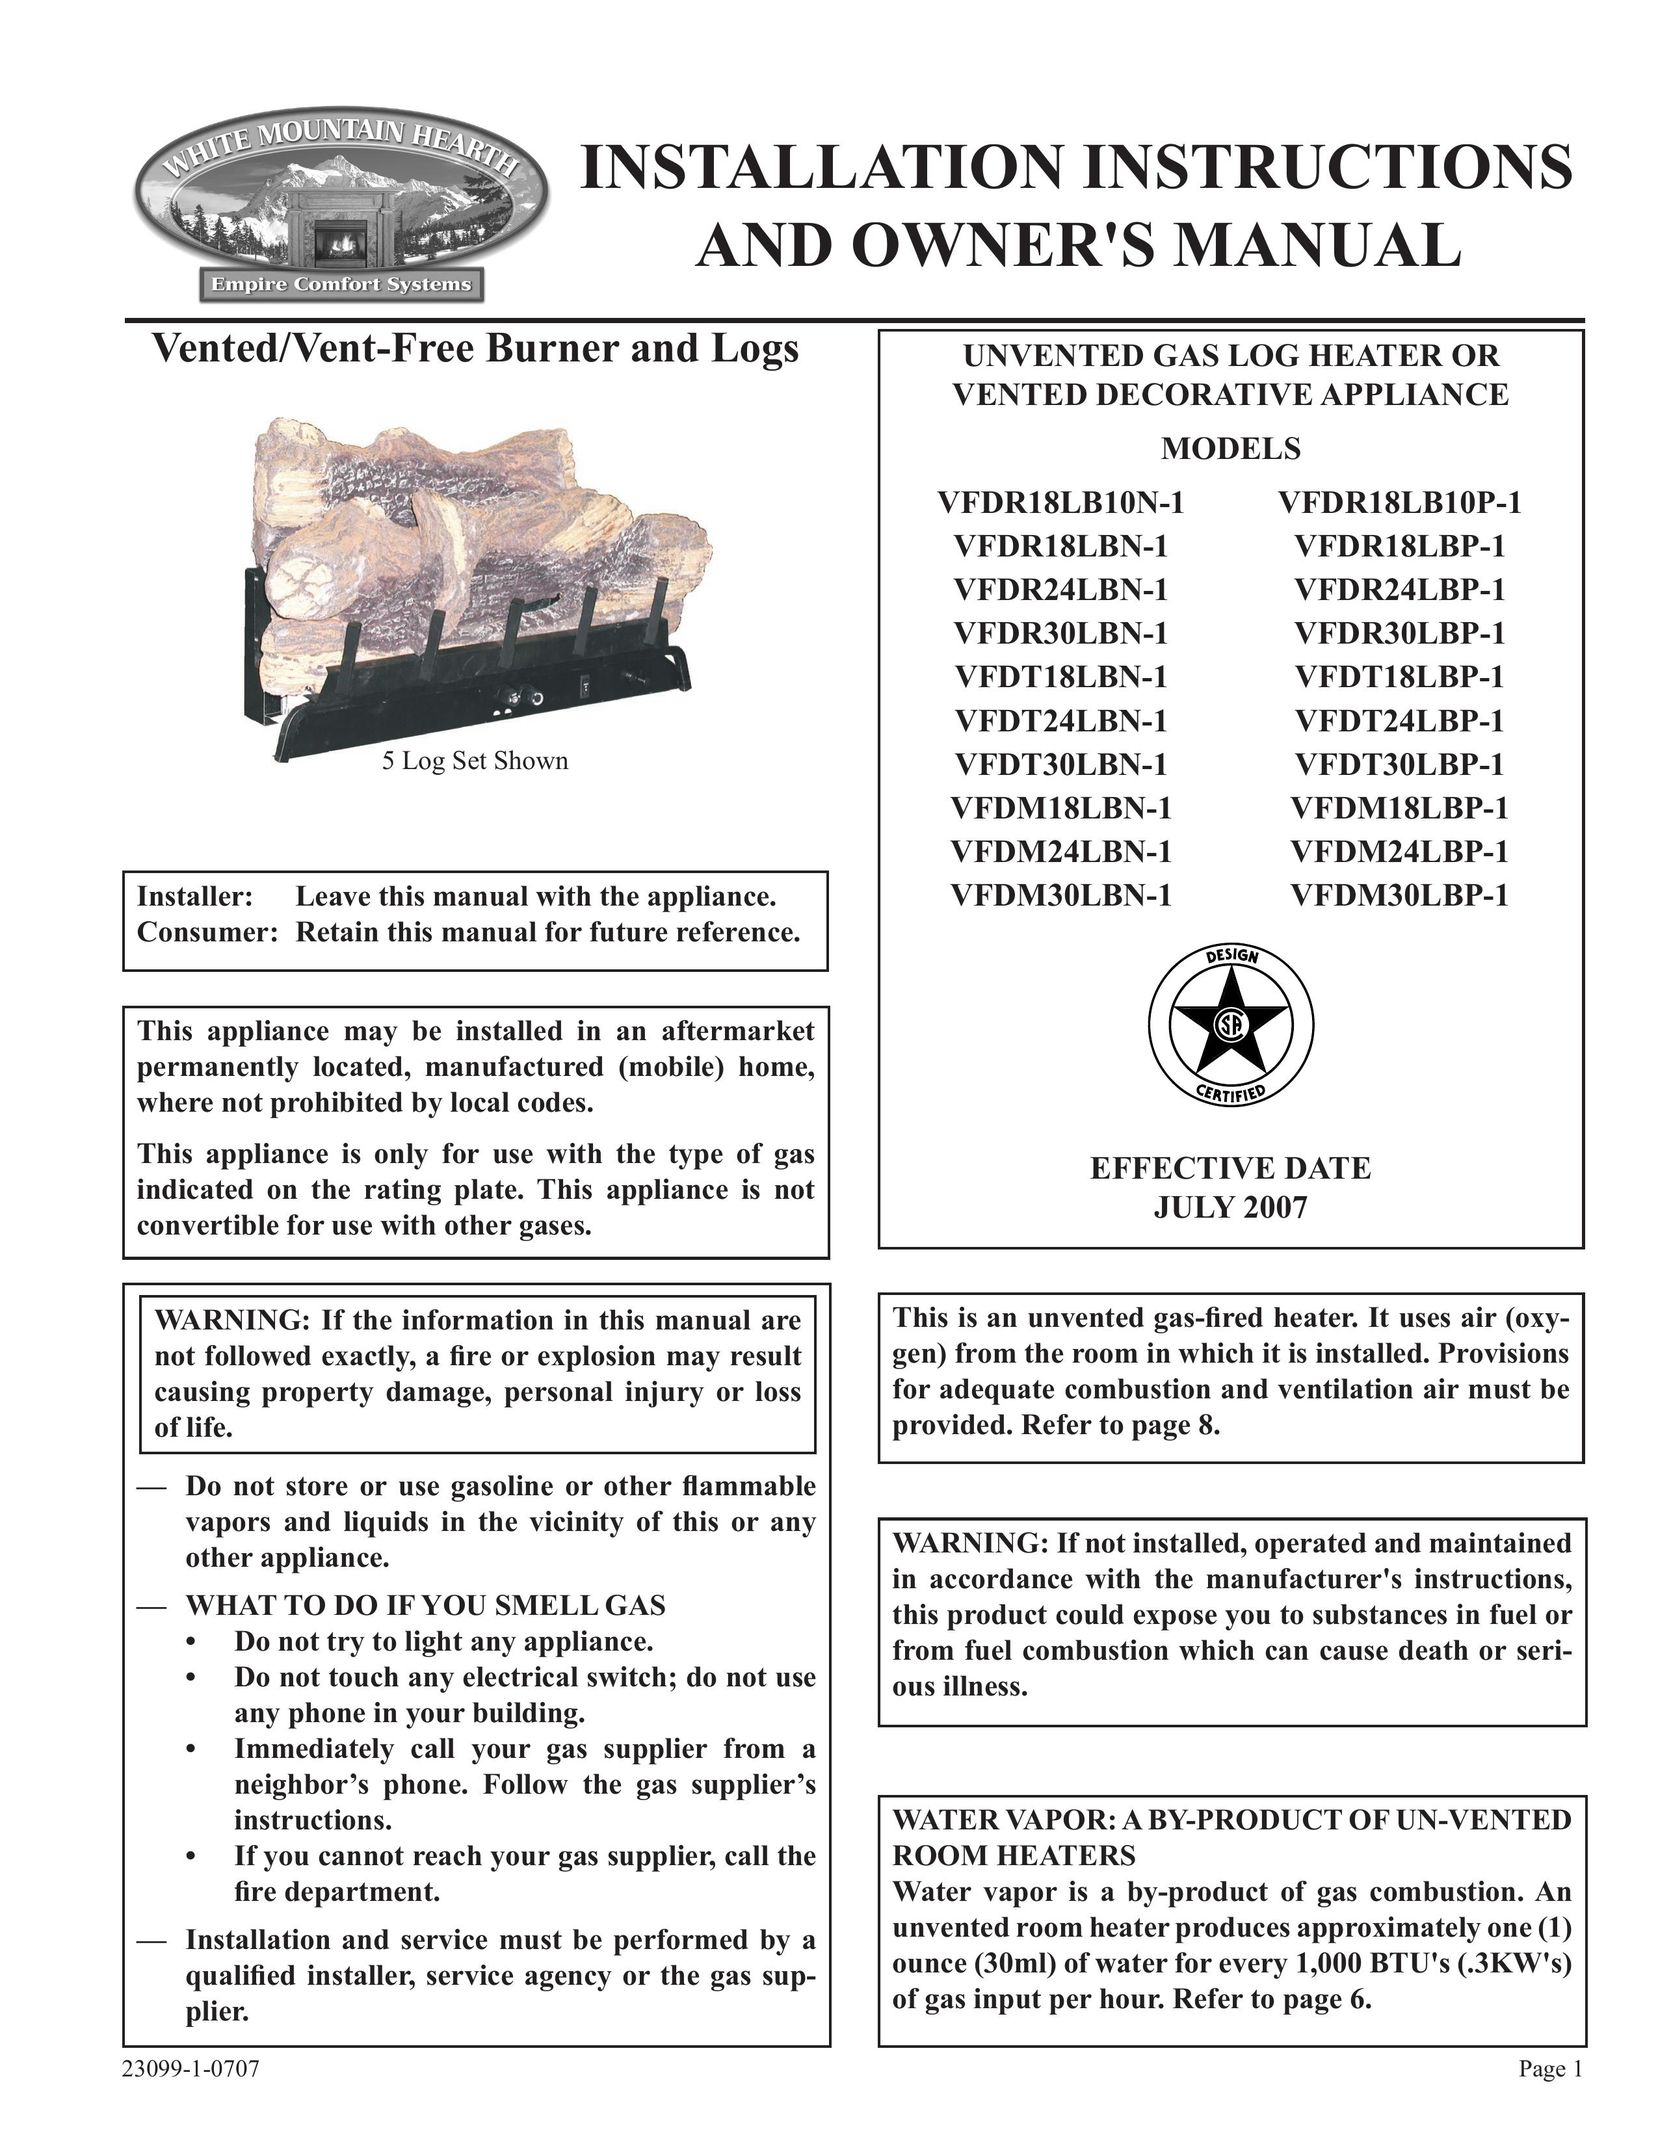 Empire Comfort Systems VFDM30LBN-1 Gas Heater User Manual